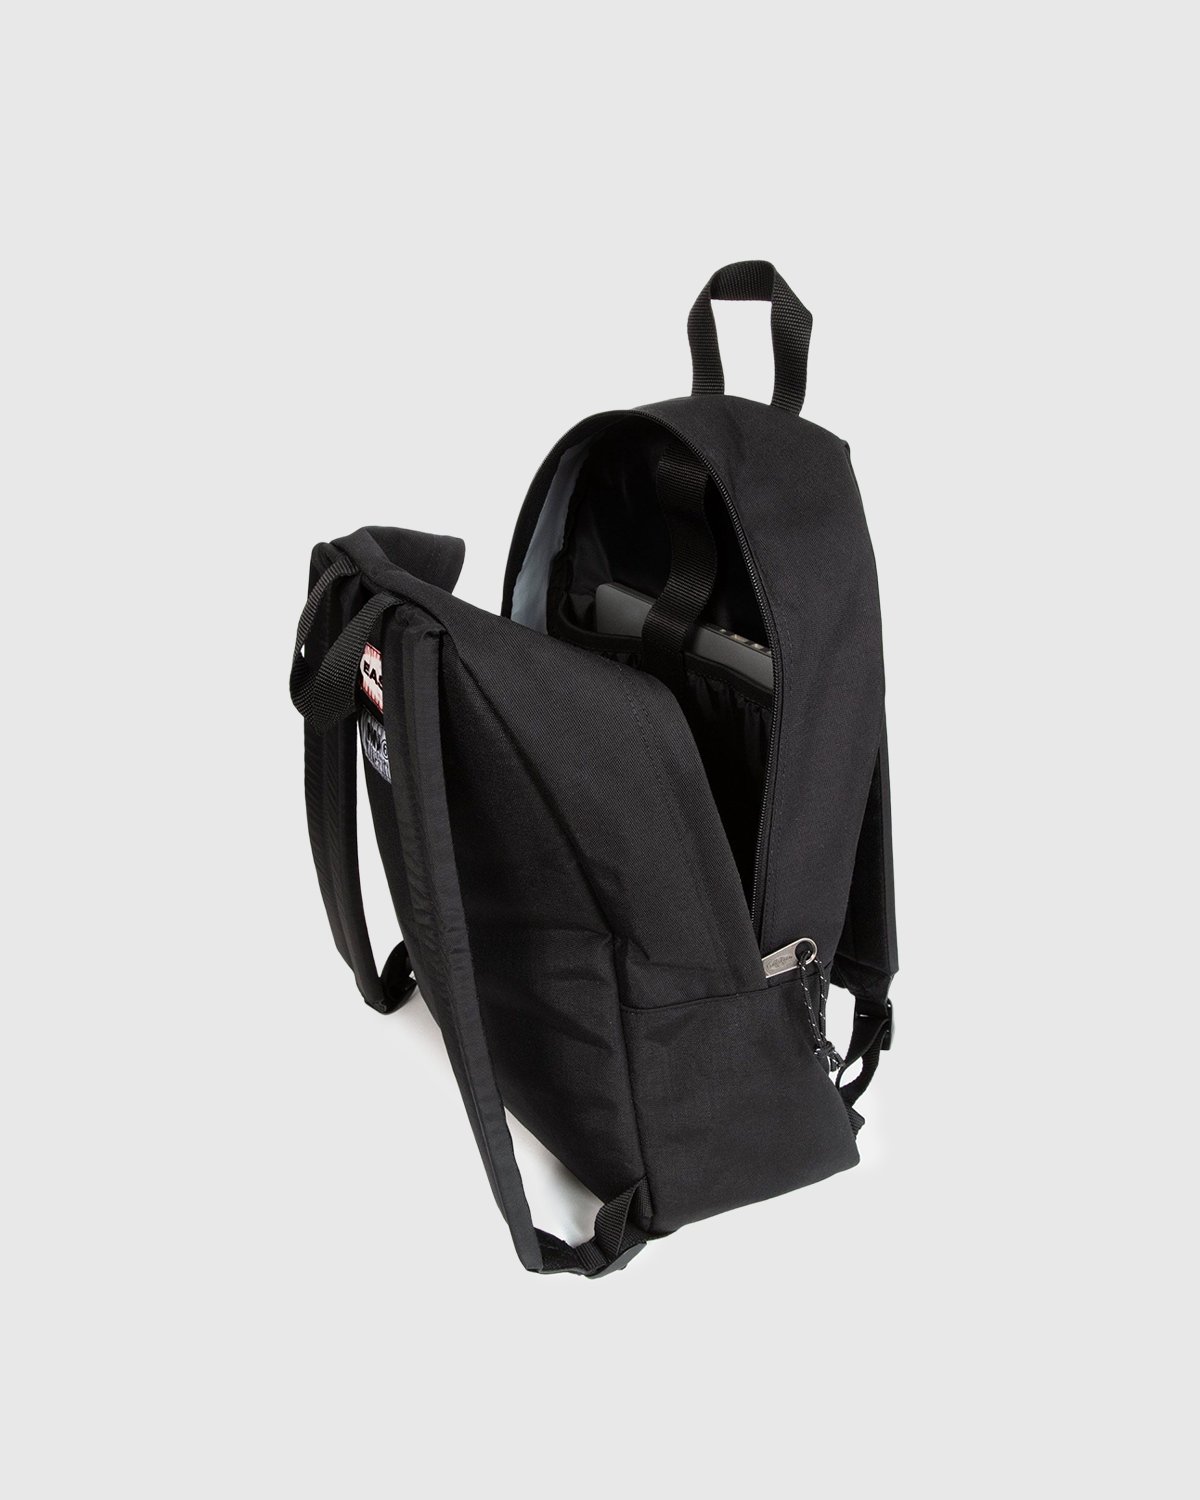 MM6 Maison Margiela x Eastpak - Padded XL Backpack Black - Accessories - Black - Image 3